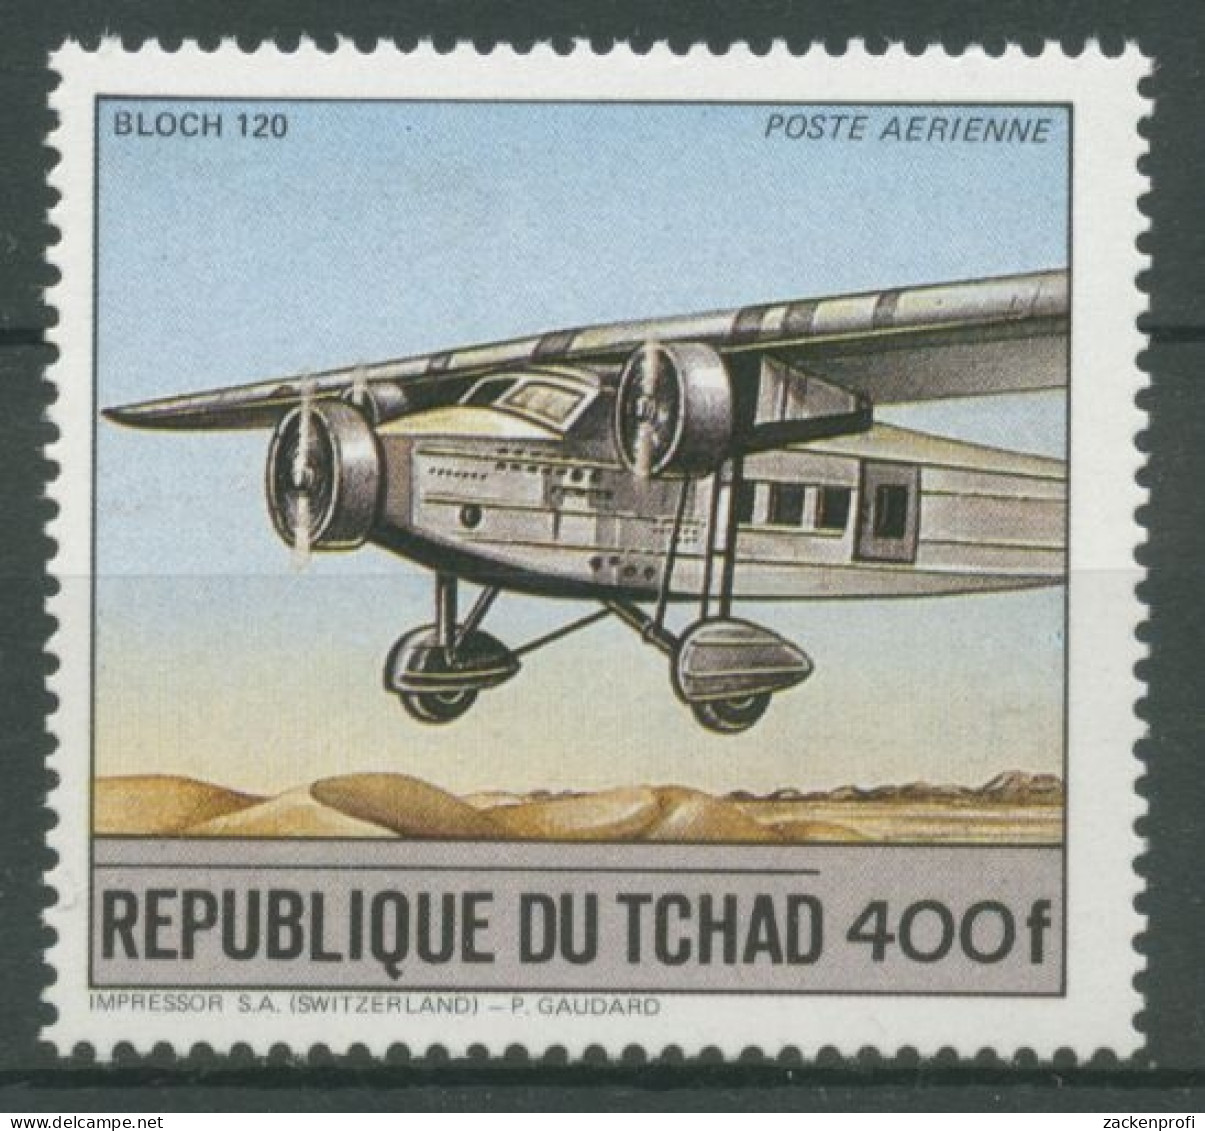 Tschad 1984 Verkehrsmittel Bloch 120 Flugzeug 1065 A Postfrisch - Tchad (1960-...)